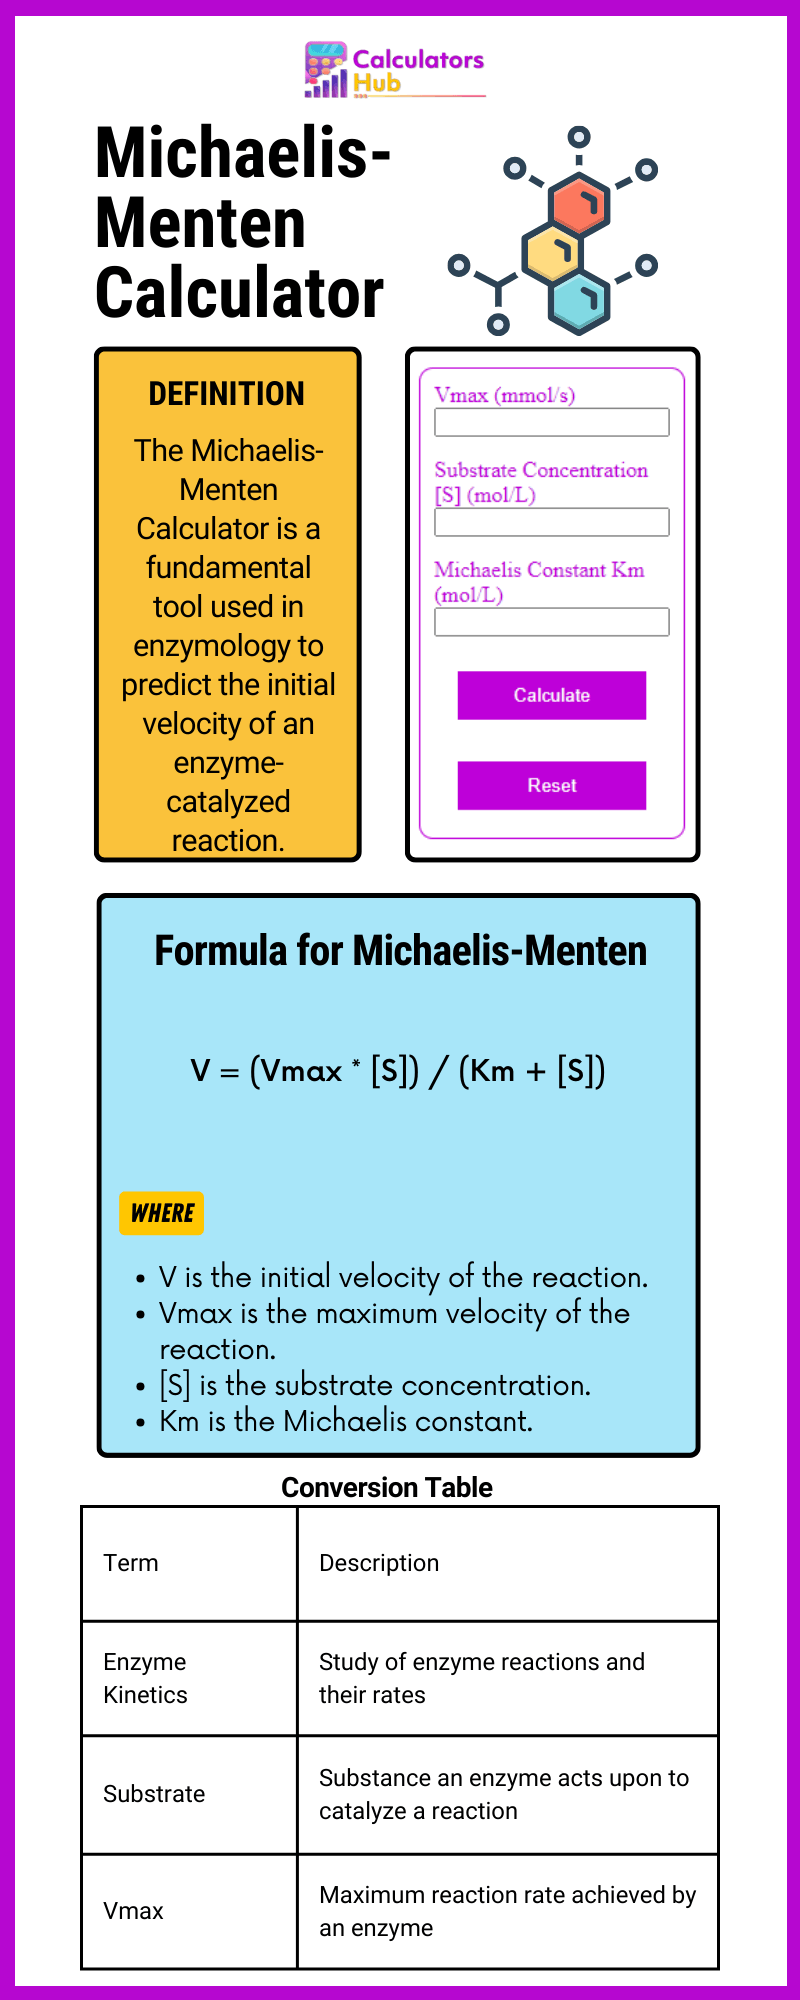 Michaelis-Menten Calculator